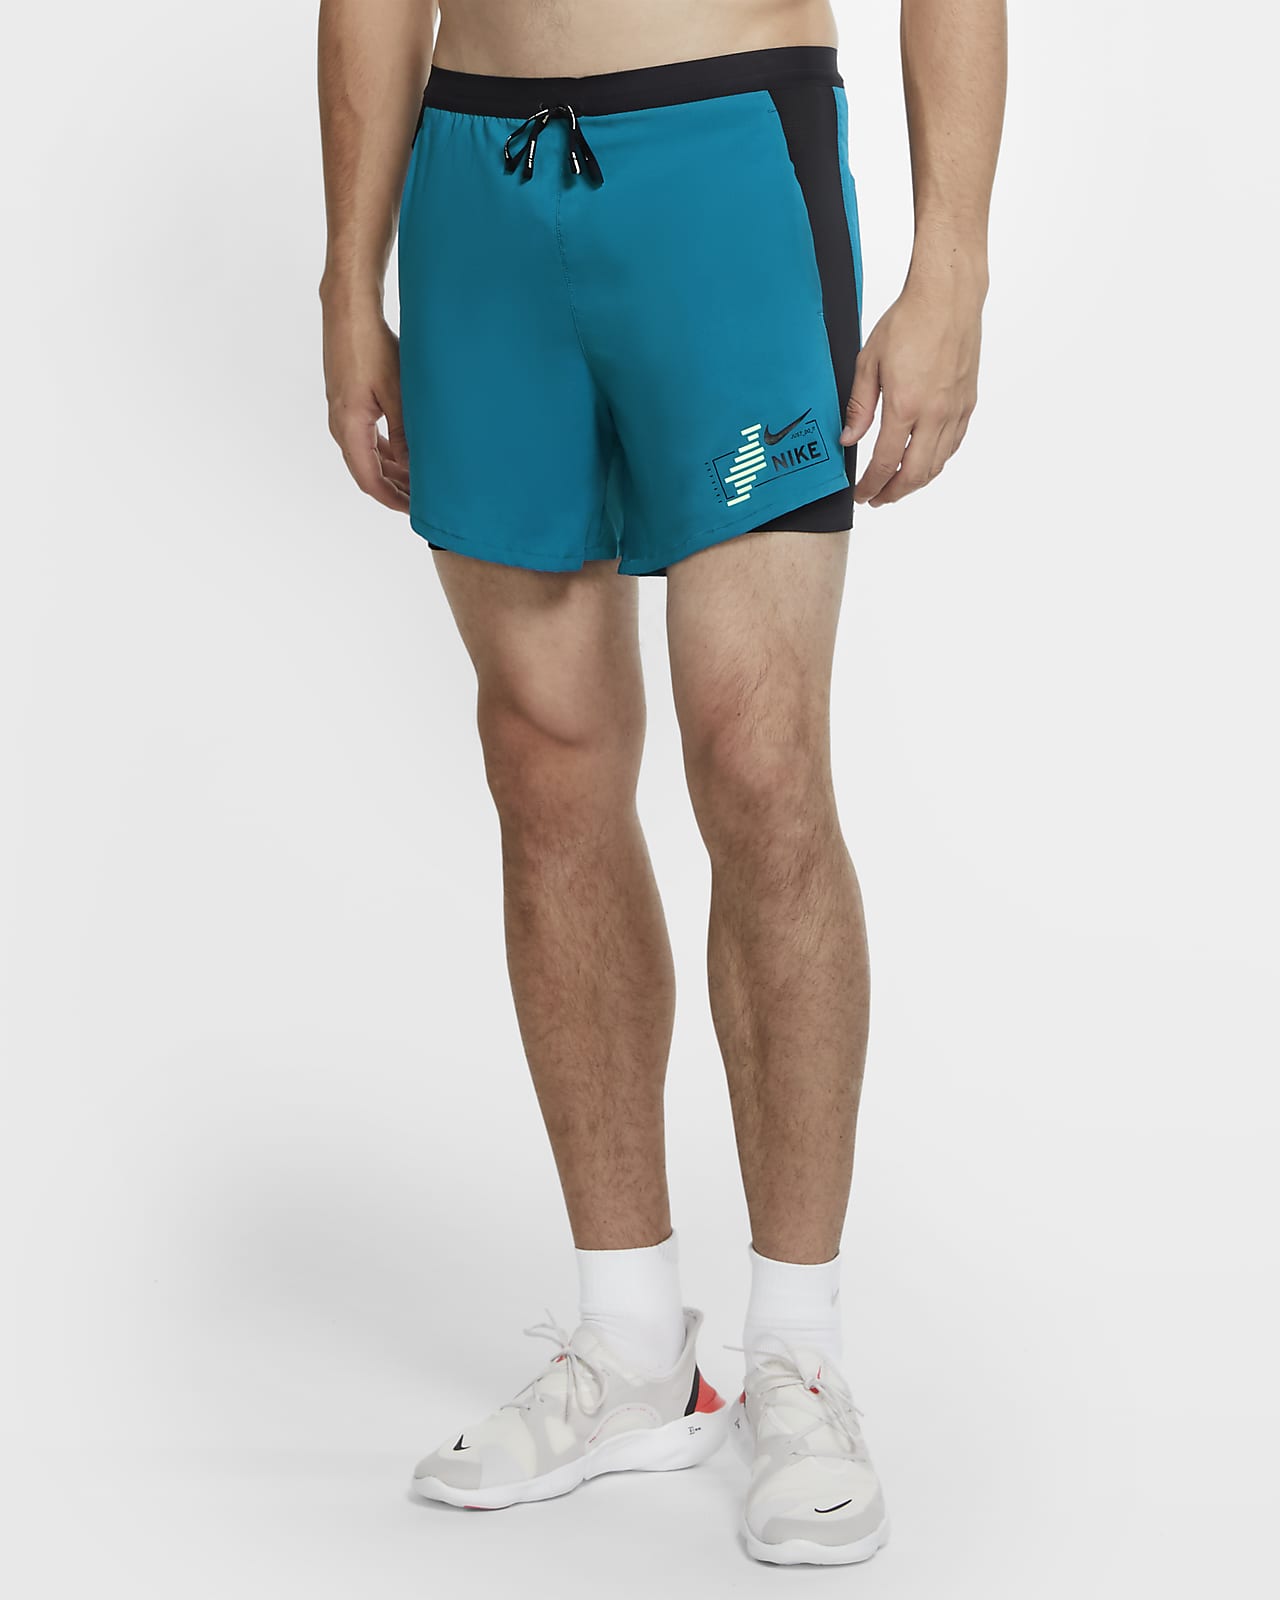 best running shorts mens uk